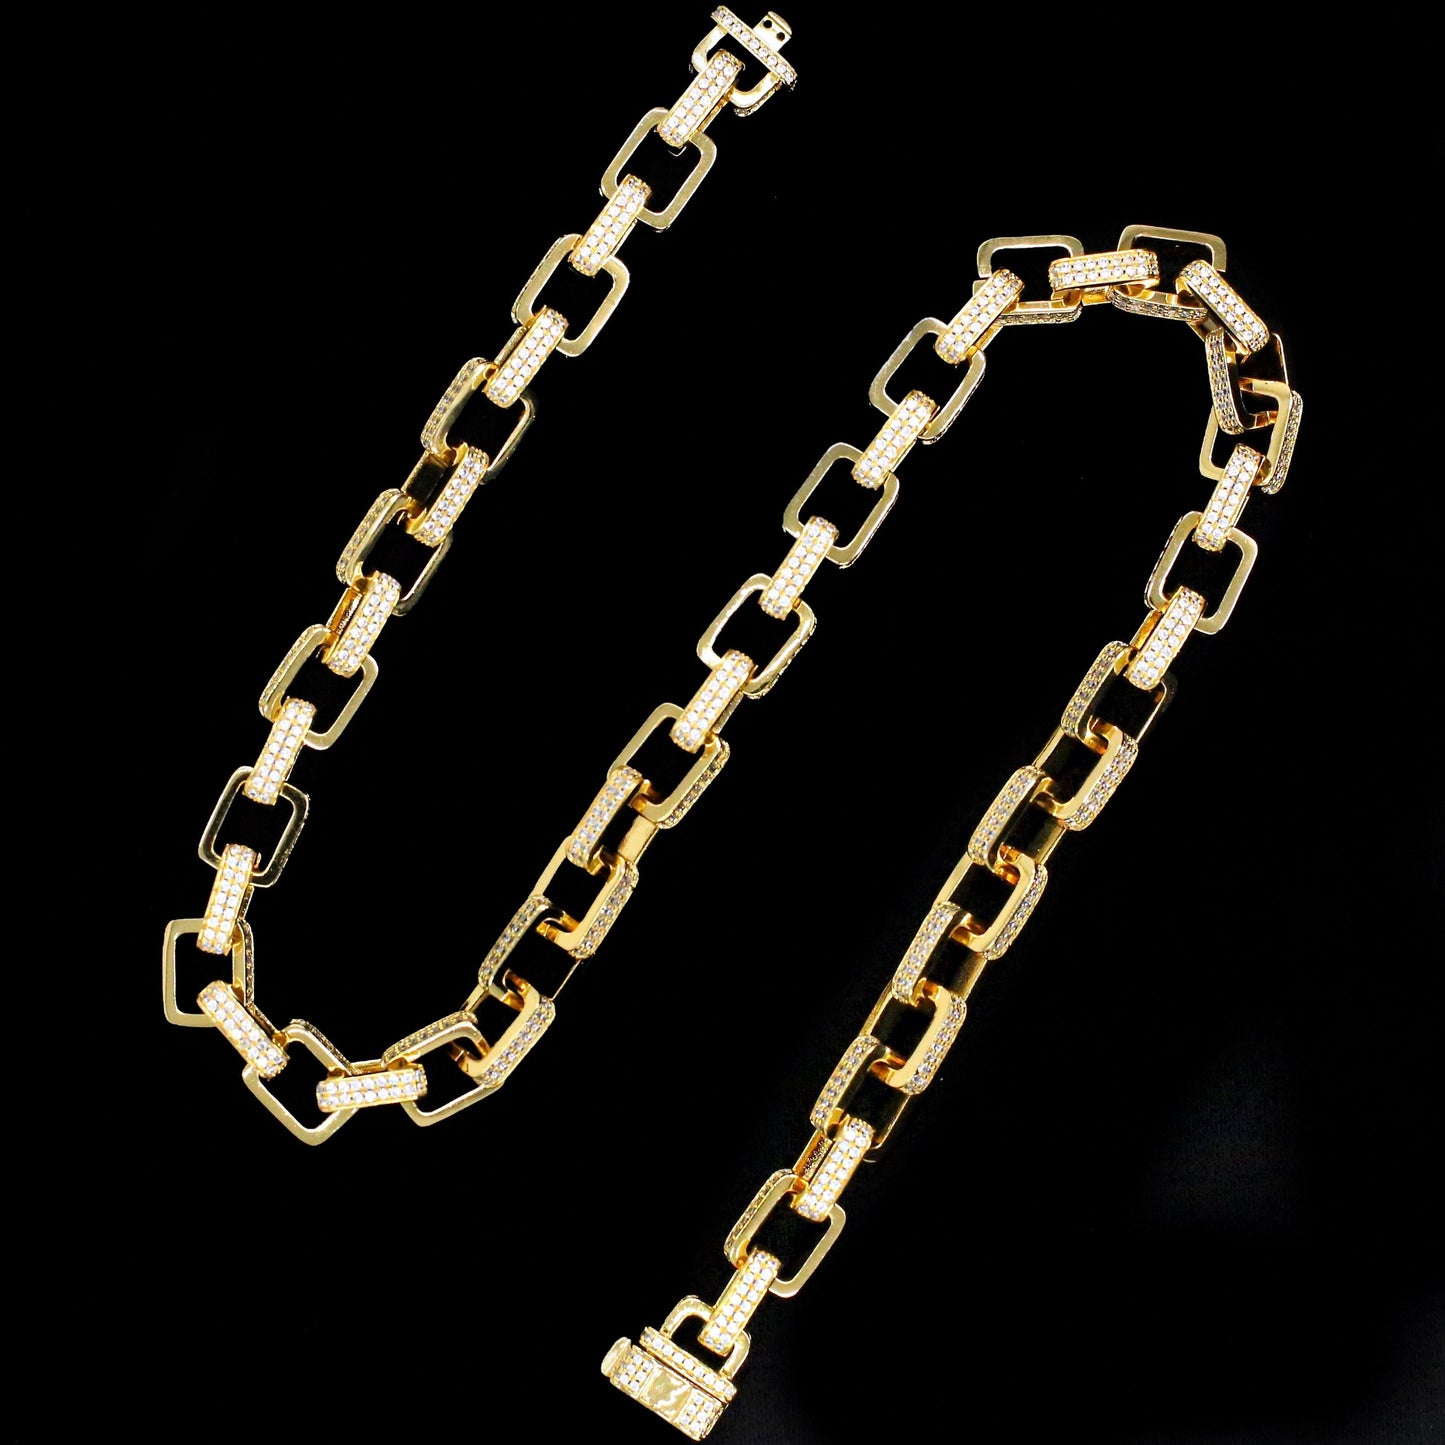 10MM Diamond Hermes Link Chain